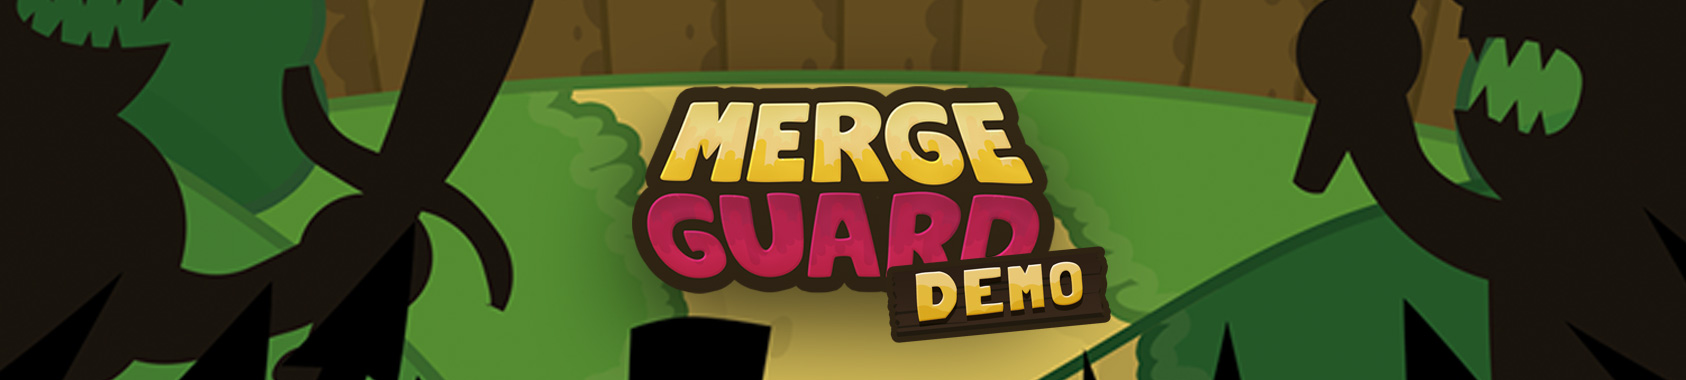 Merge Guard DEMO